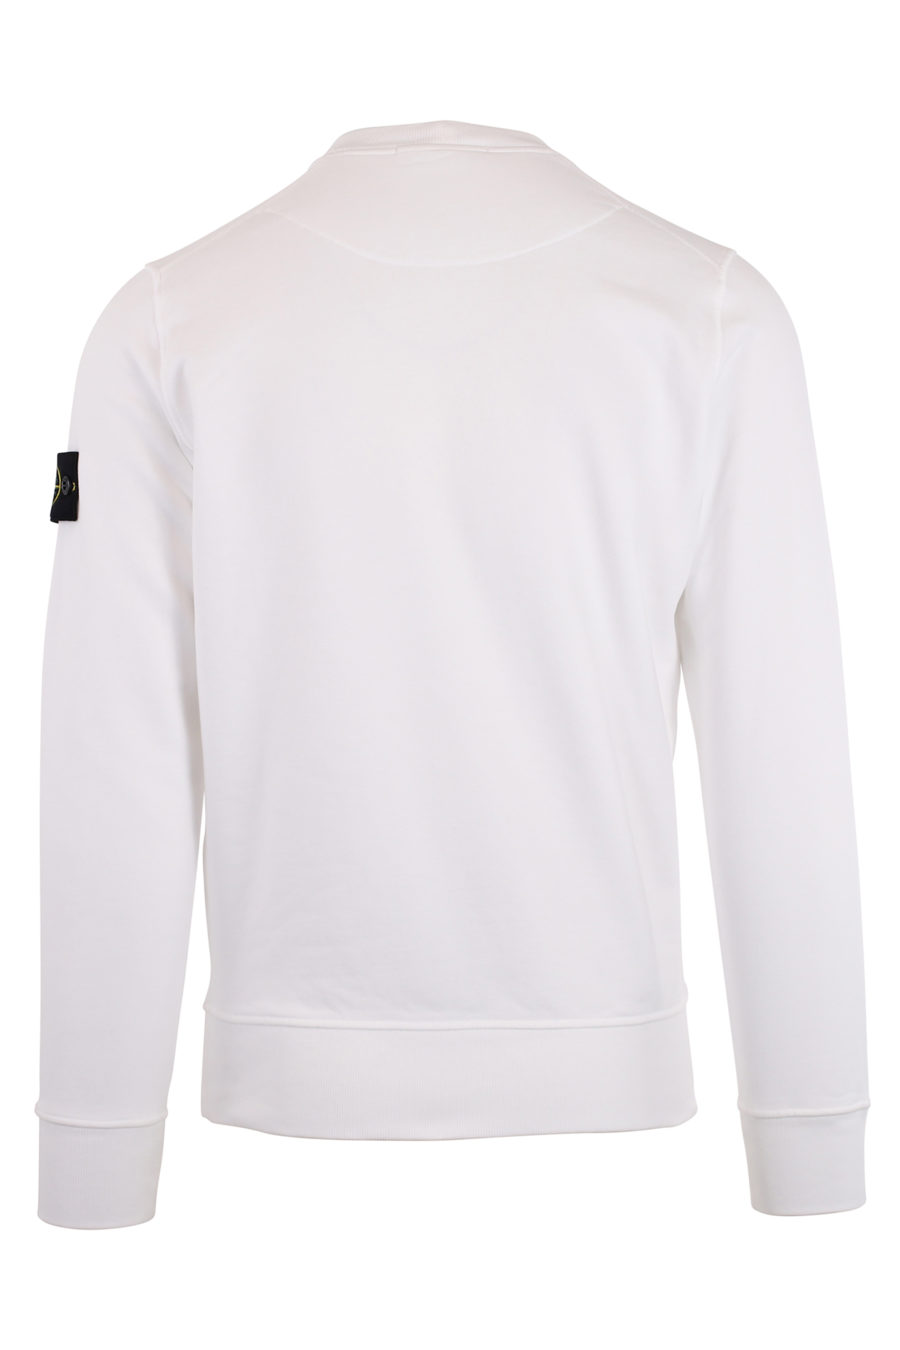 Sweat blanc avec logo - IMG 9659